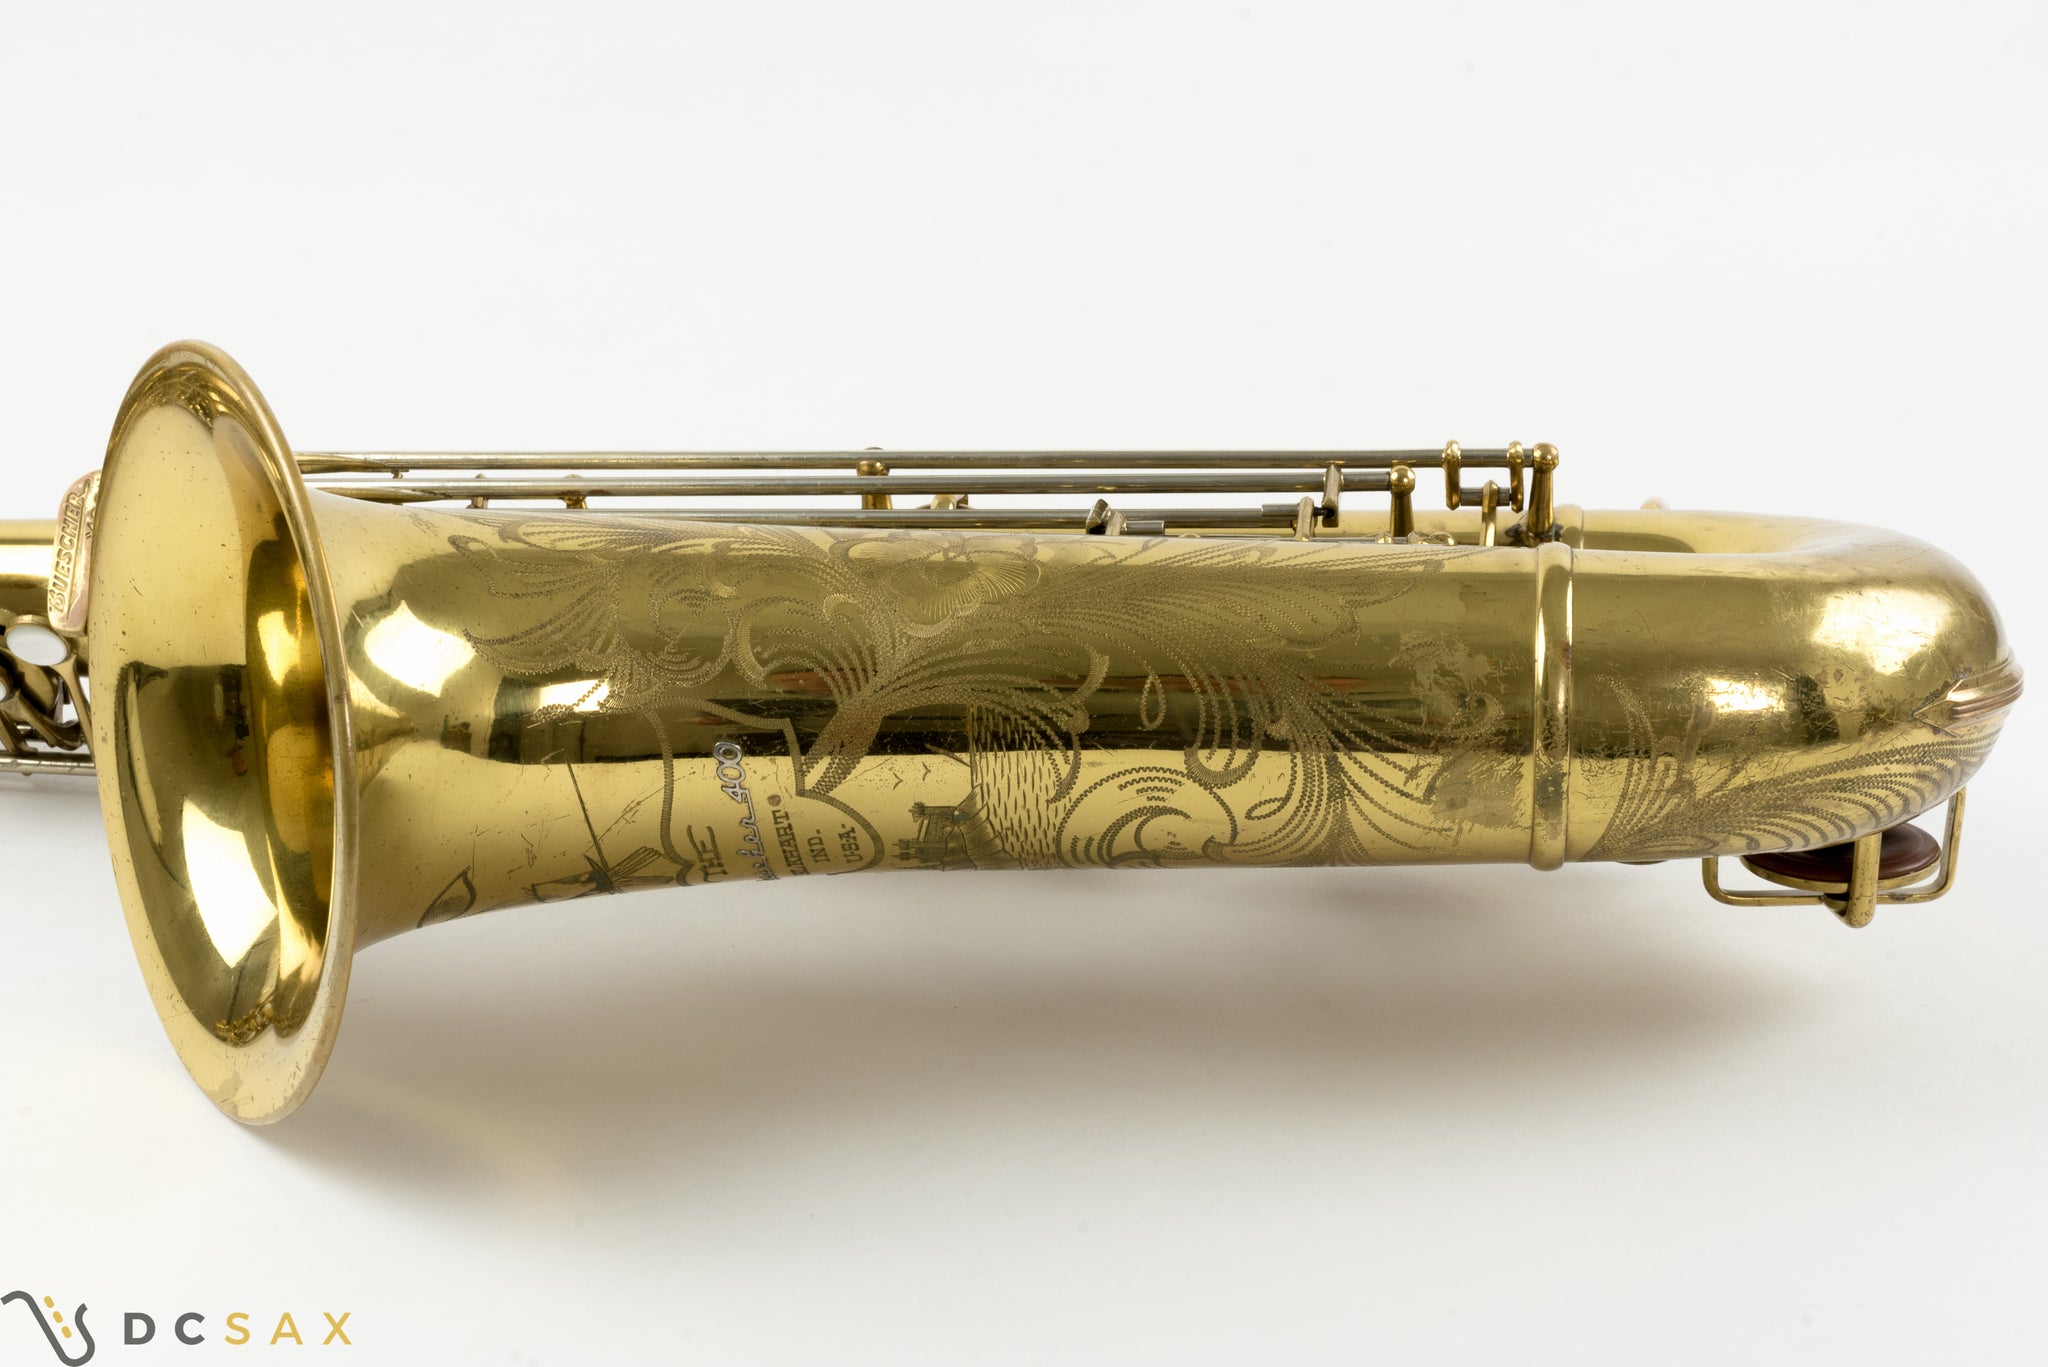 1948 Buescher 400 Top Hat and Cane Tenor Saxophone, 97% Original Lacquer